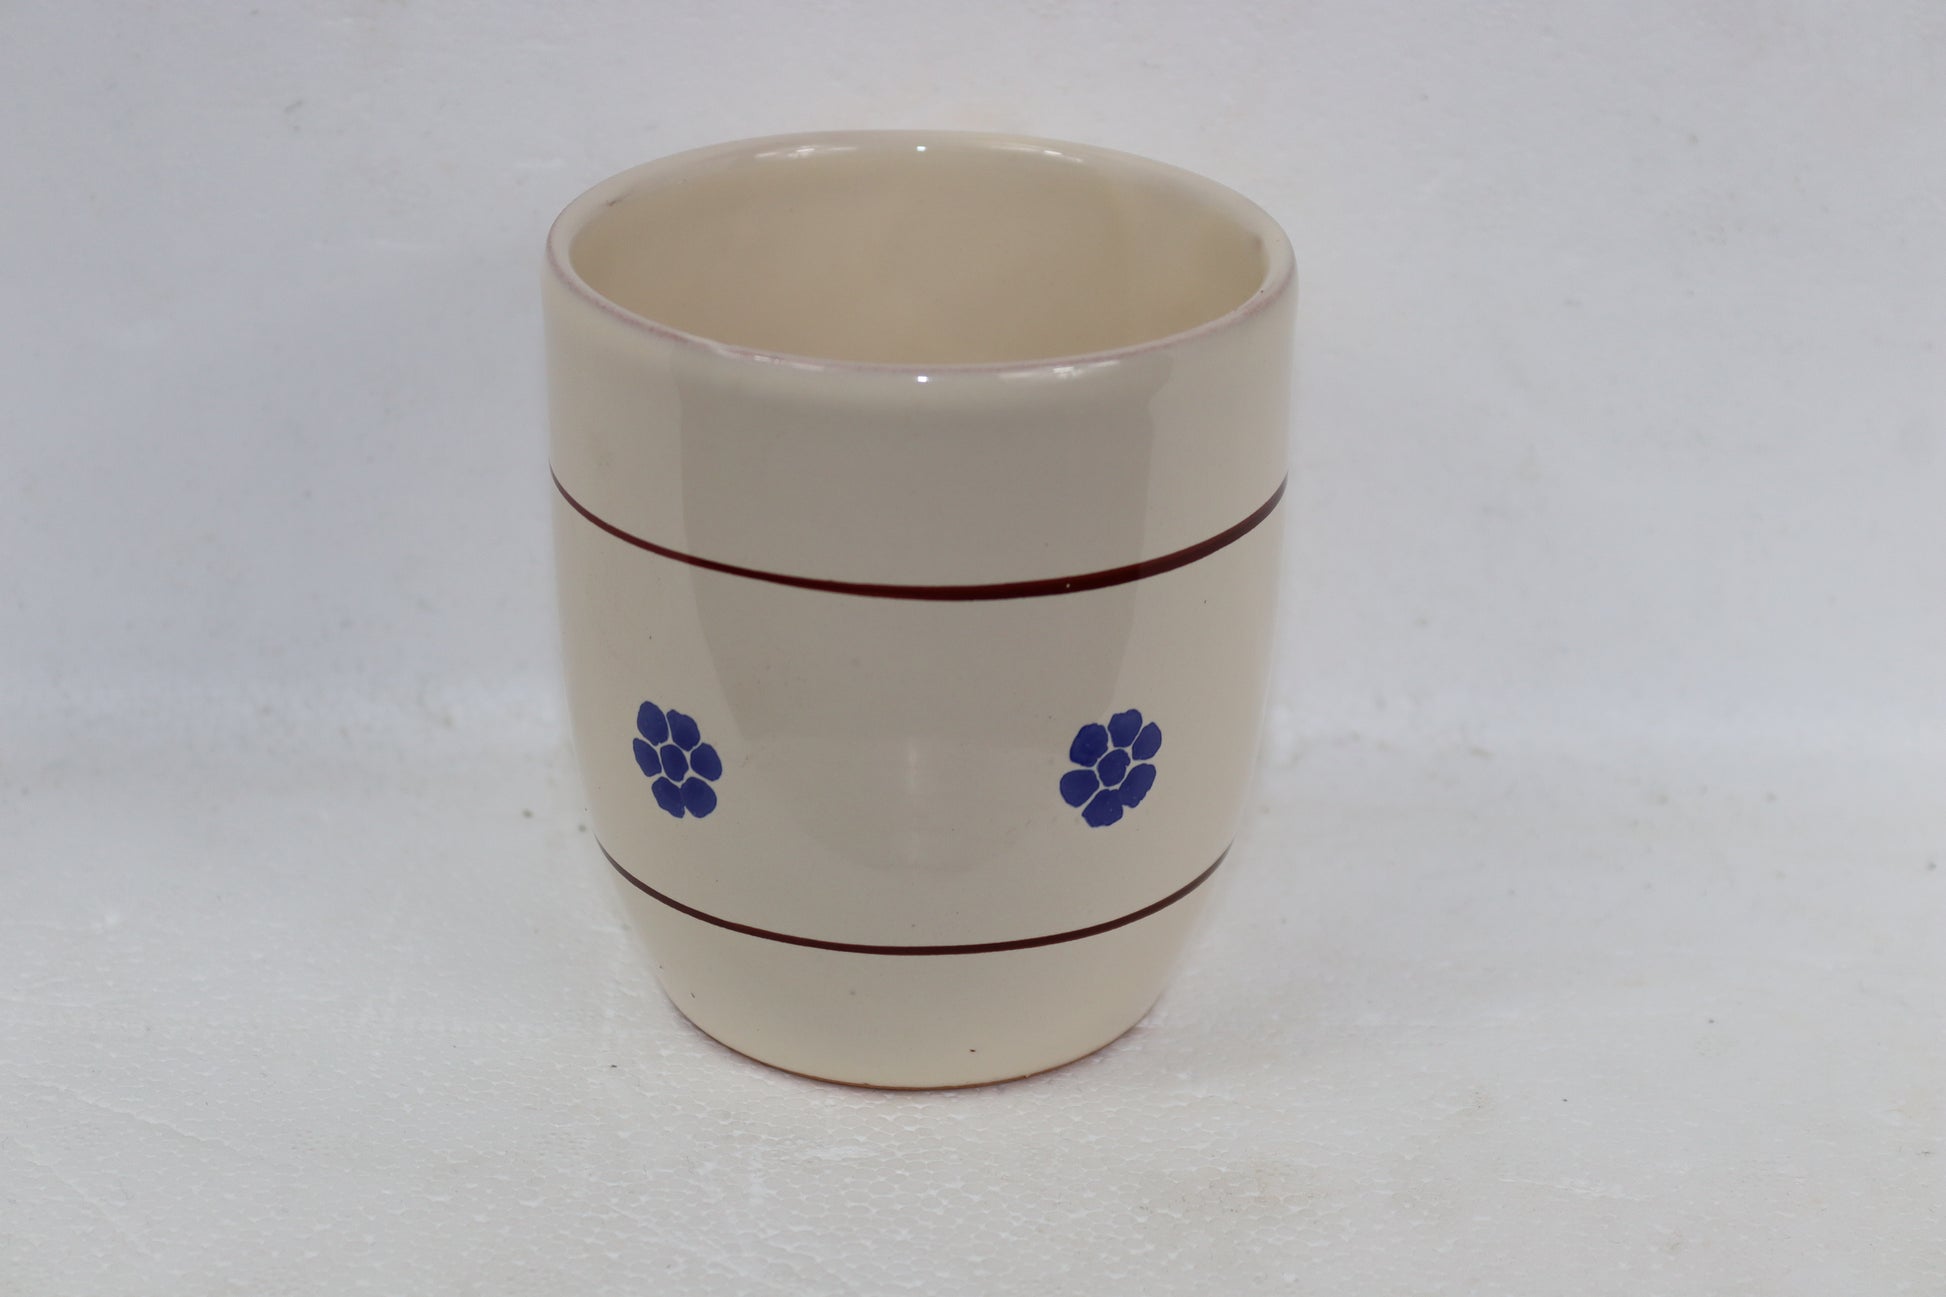 Bicchieri grandi in ceramica tradizionale calabrese